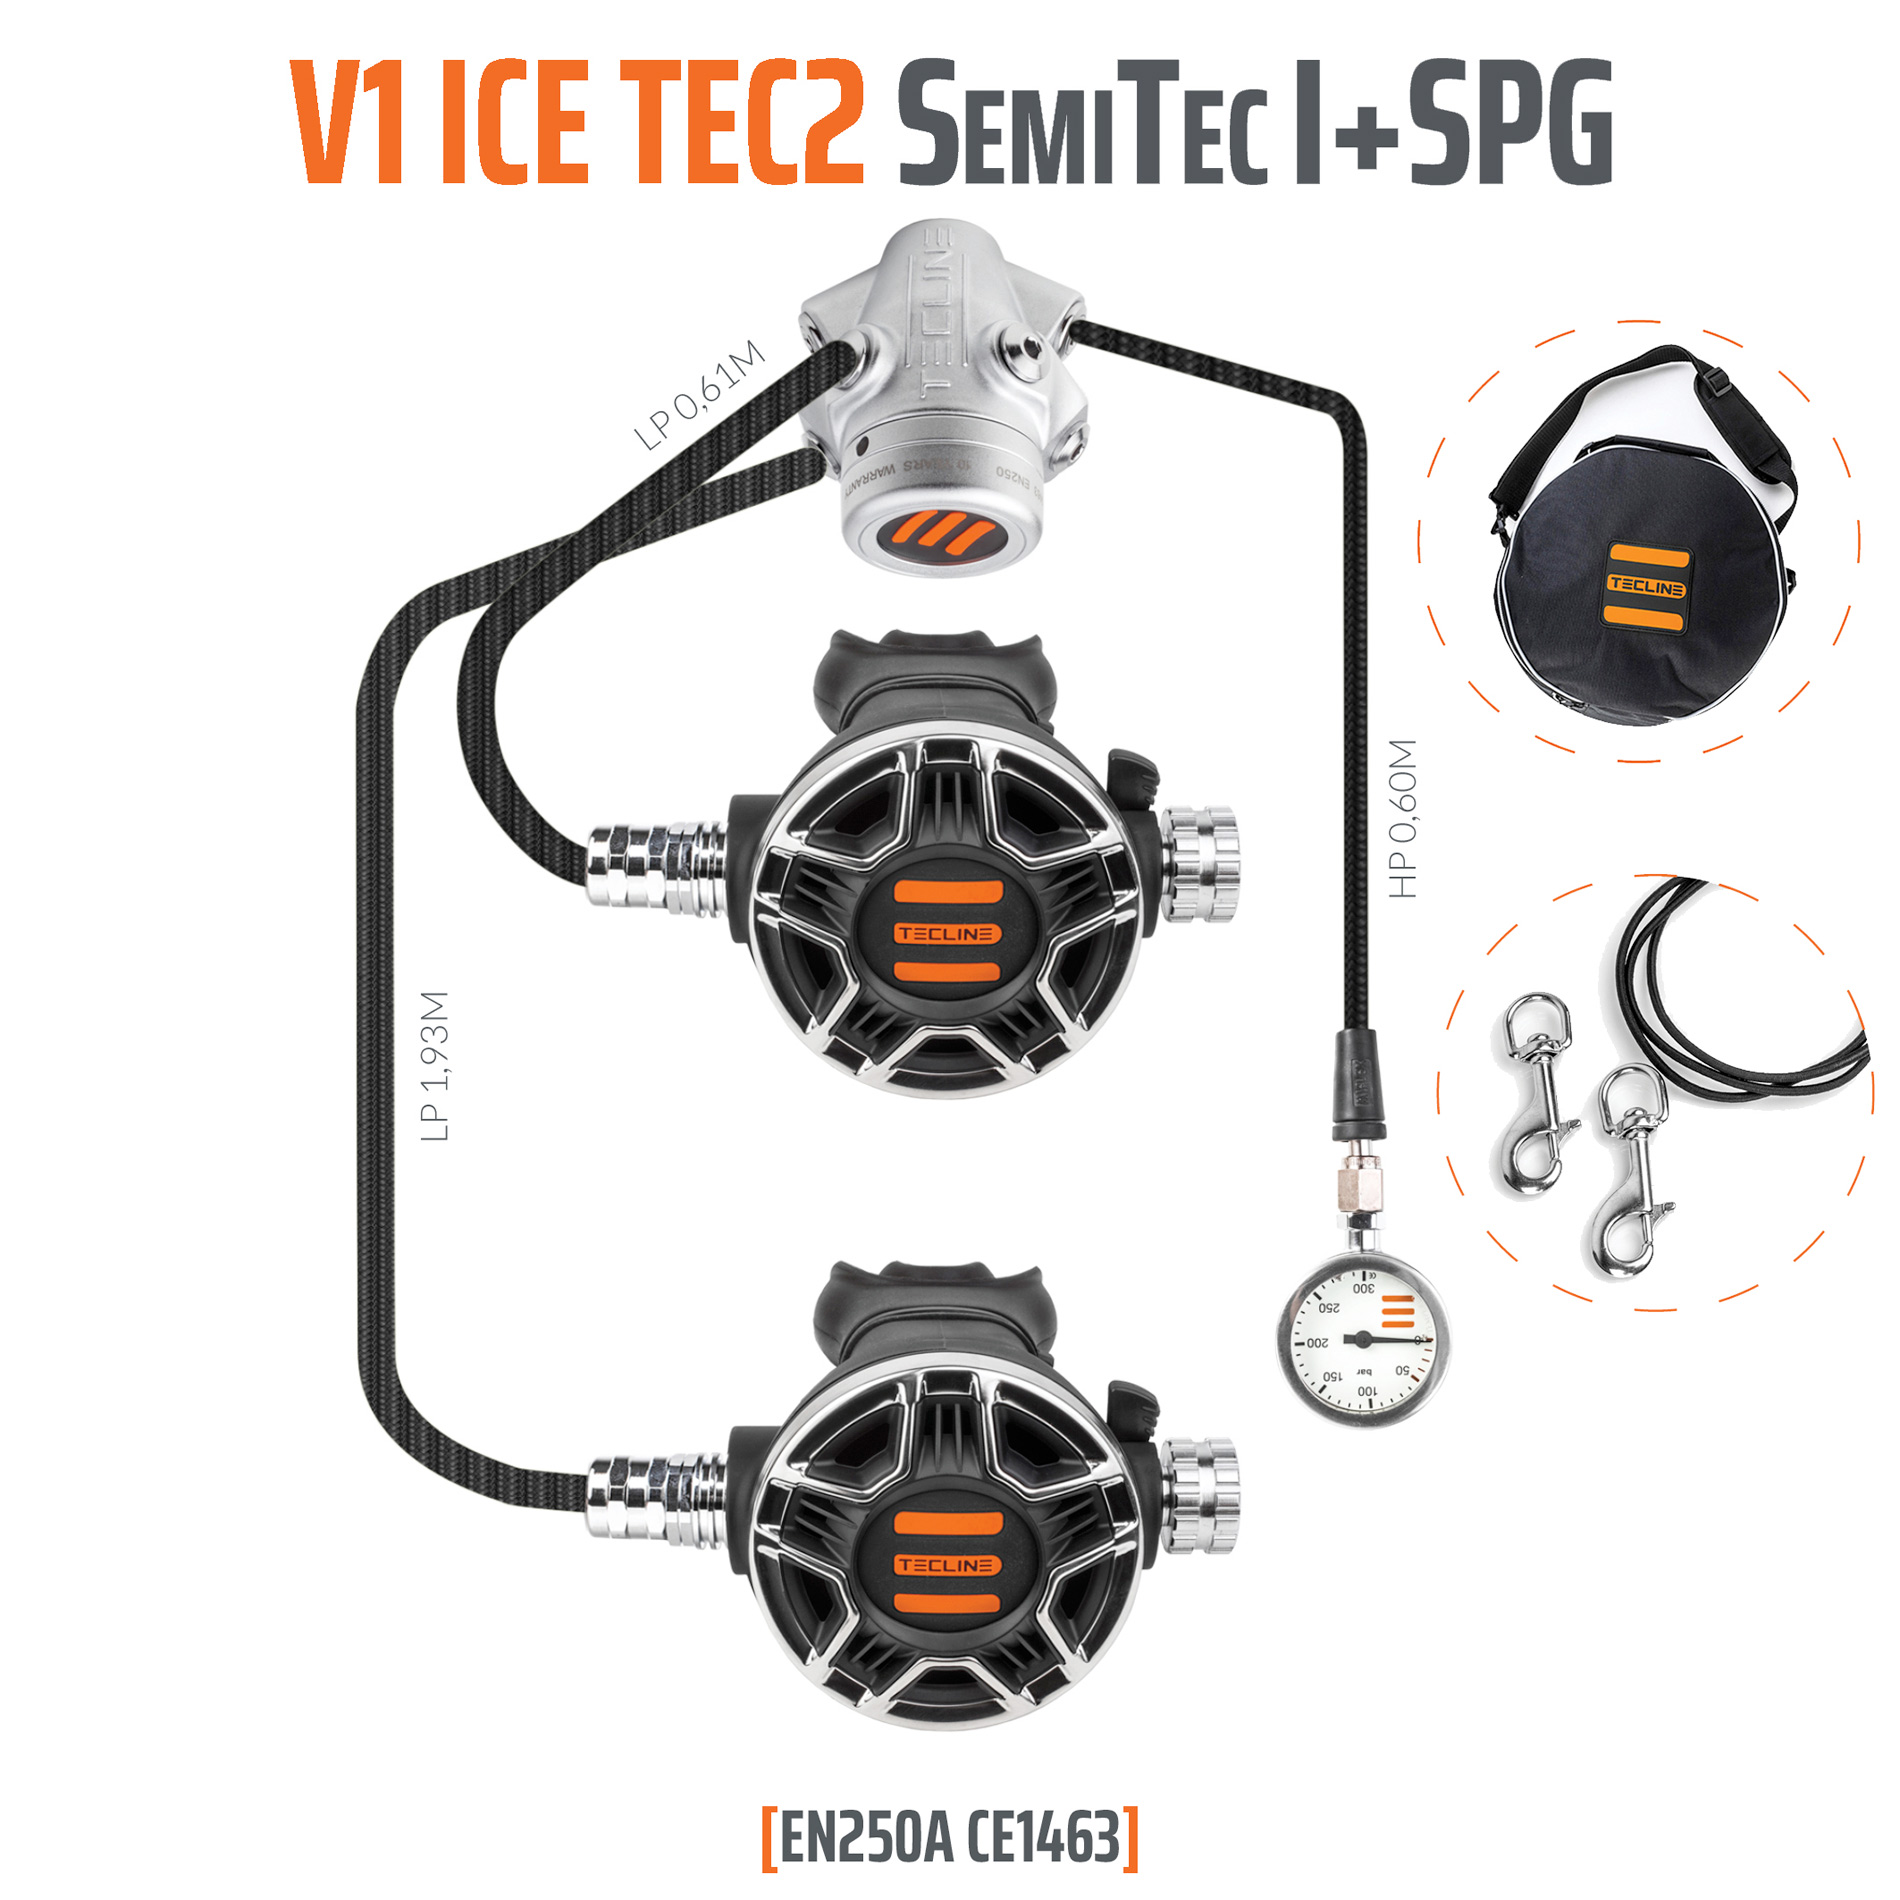 Tecline Regulator V1 ICE TEC2 SemiTec I set with SPG - EN250A